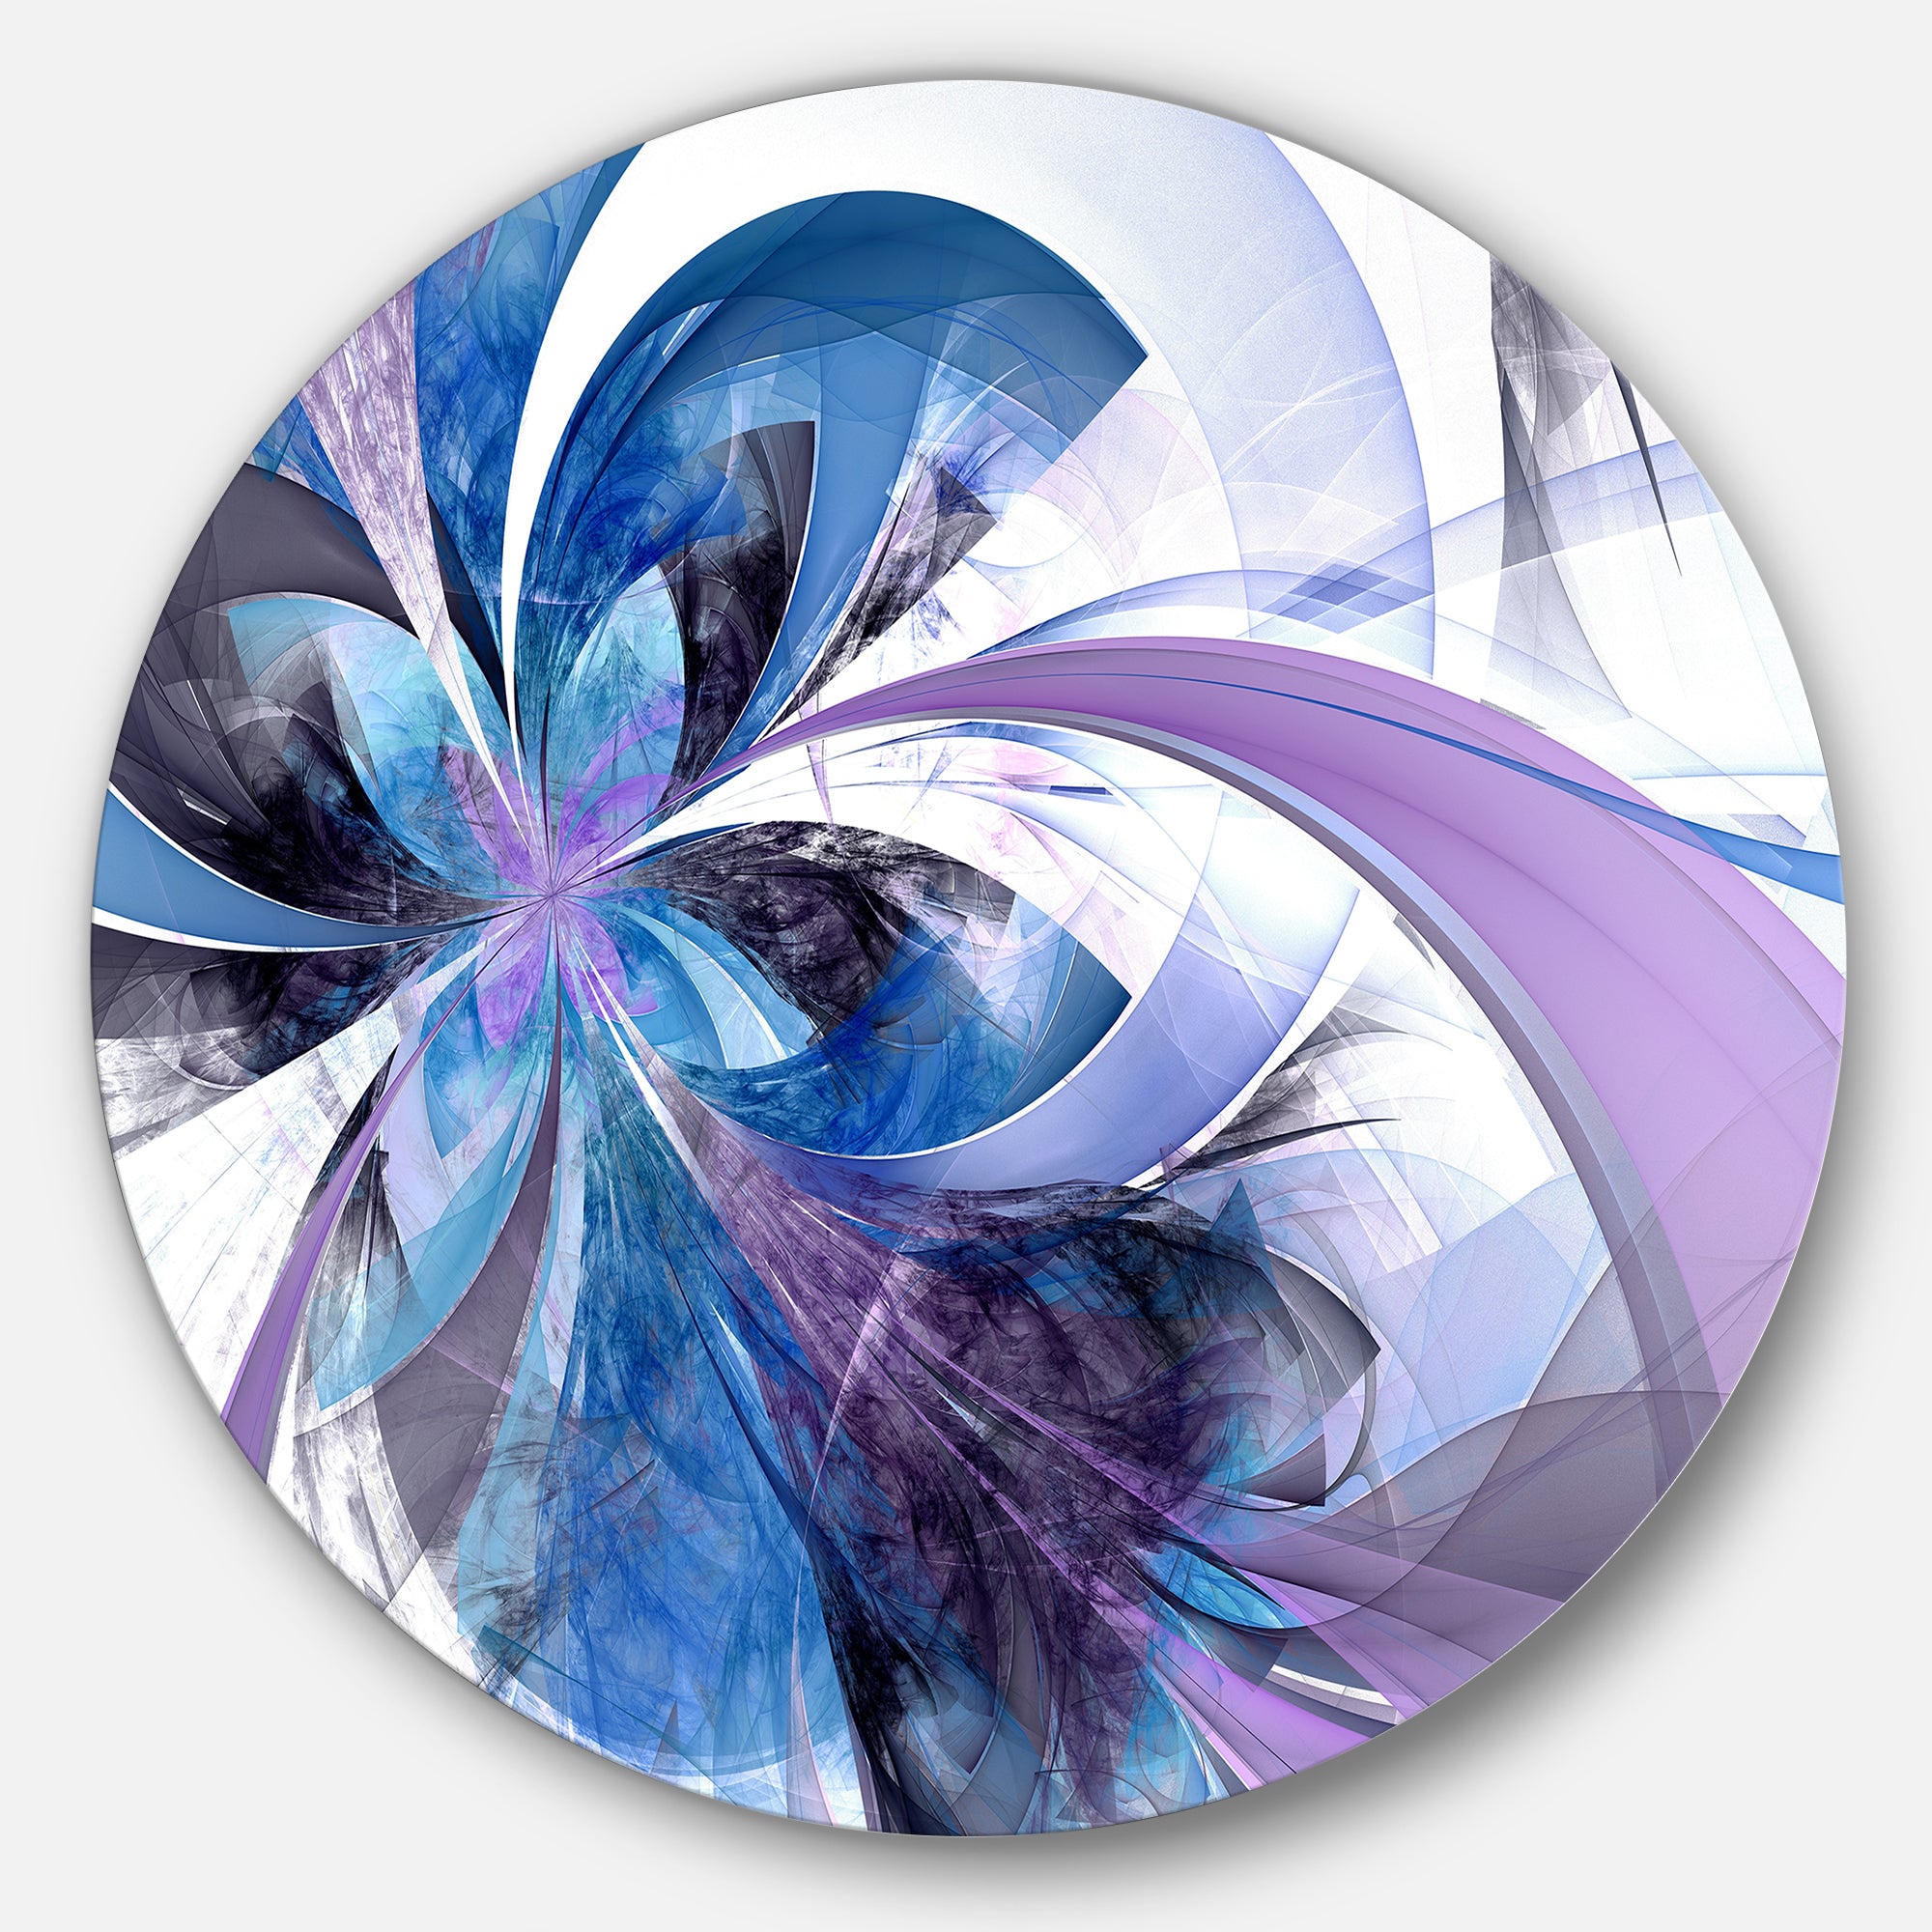 Symmetrical Fractal Flower in Blue' Floral Metal Circle Wall Art